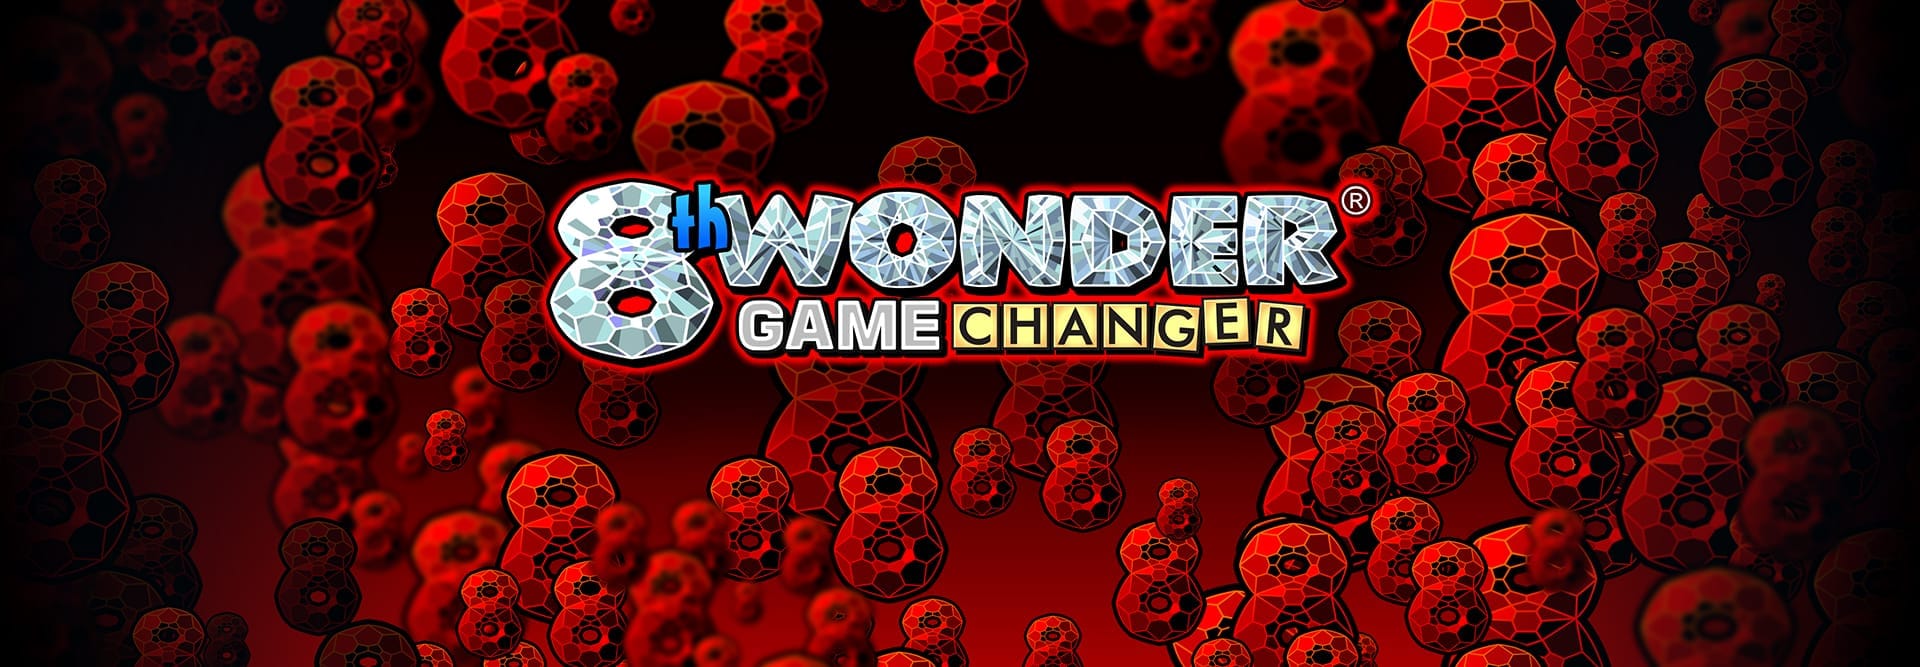 8th Wonder Game Changer - Game Banner